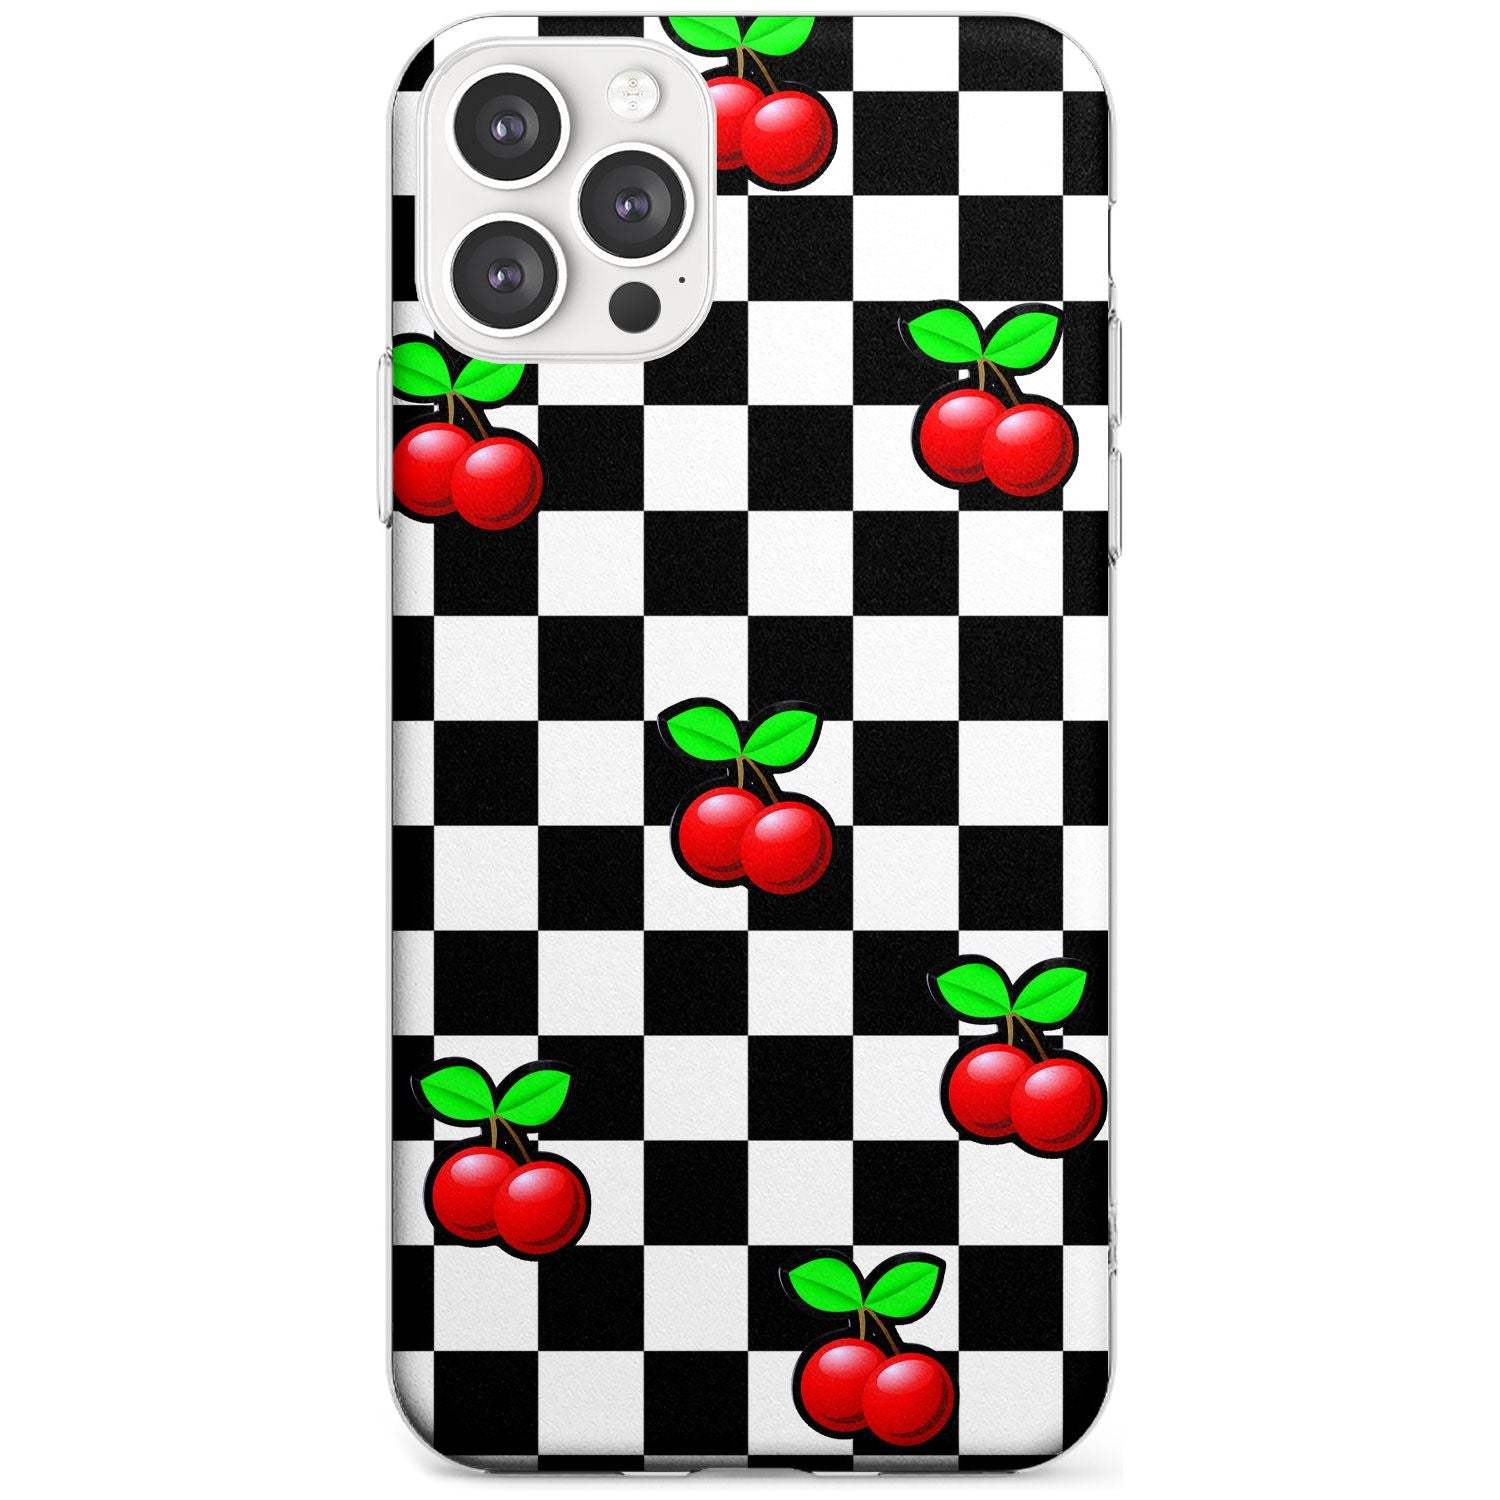 Checkered Cherry Slim TPU Phone Case for iPhone 11 Pro Max